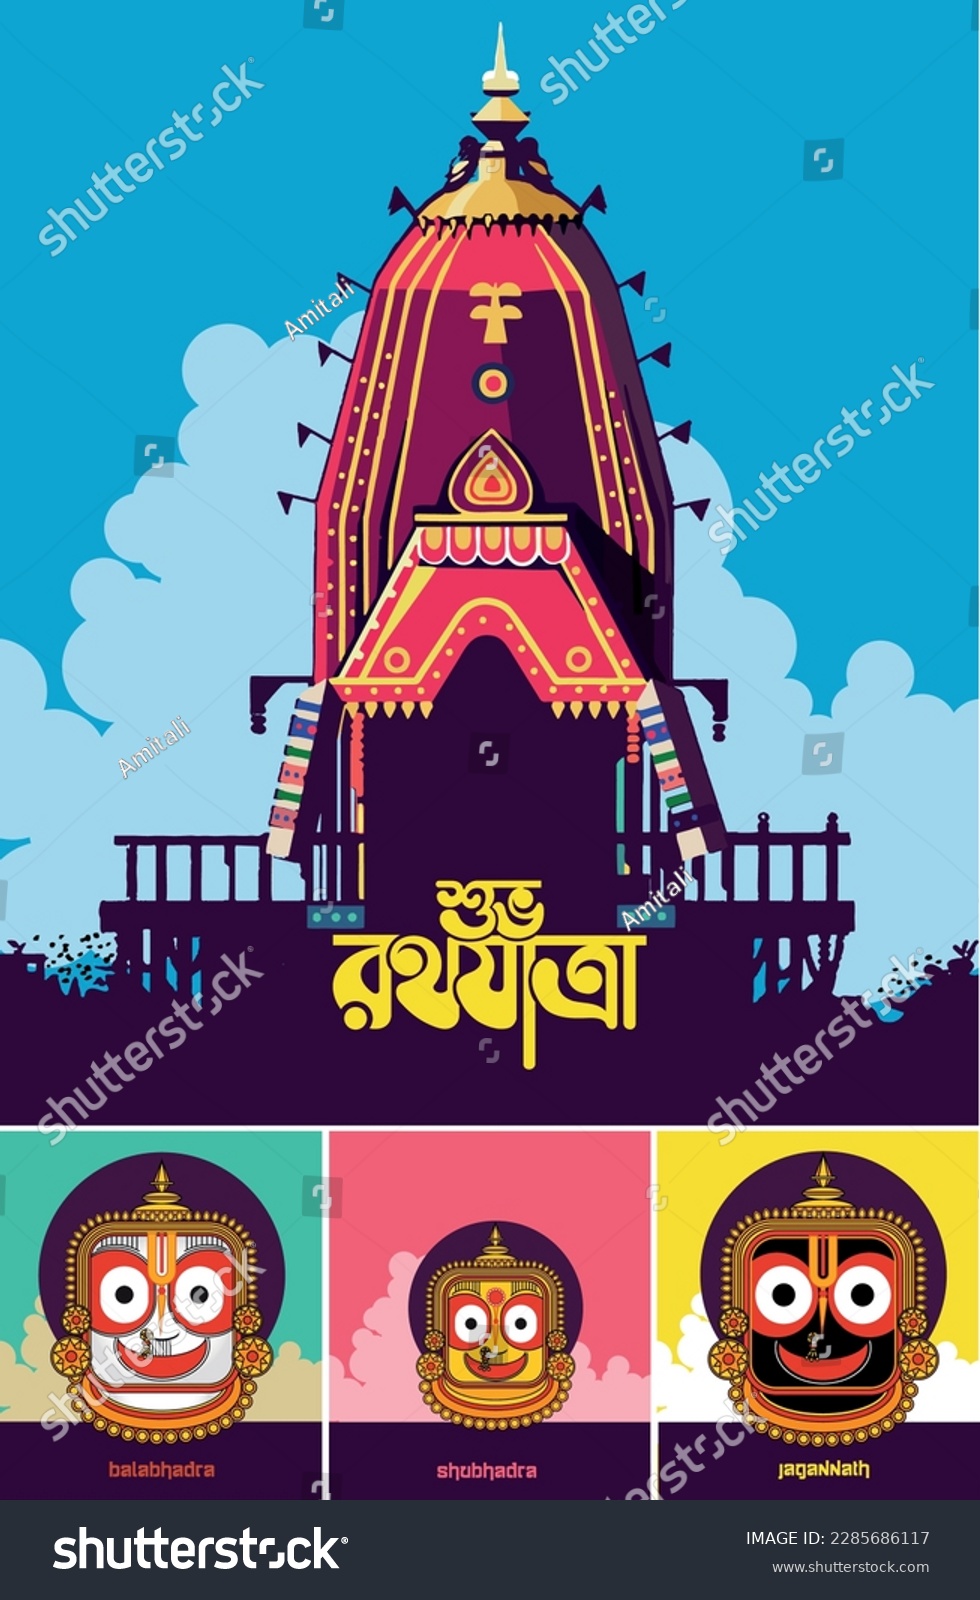 SVG of Illustration of ratha yatra festival in India with bangla Font svg